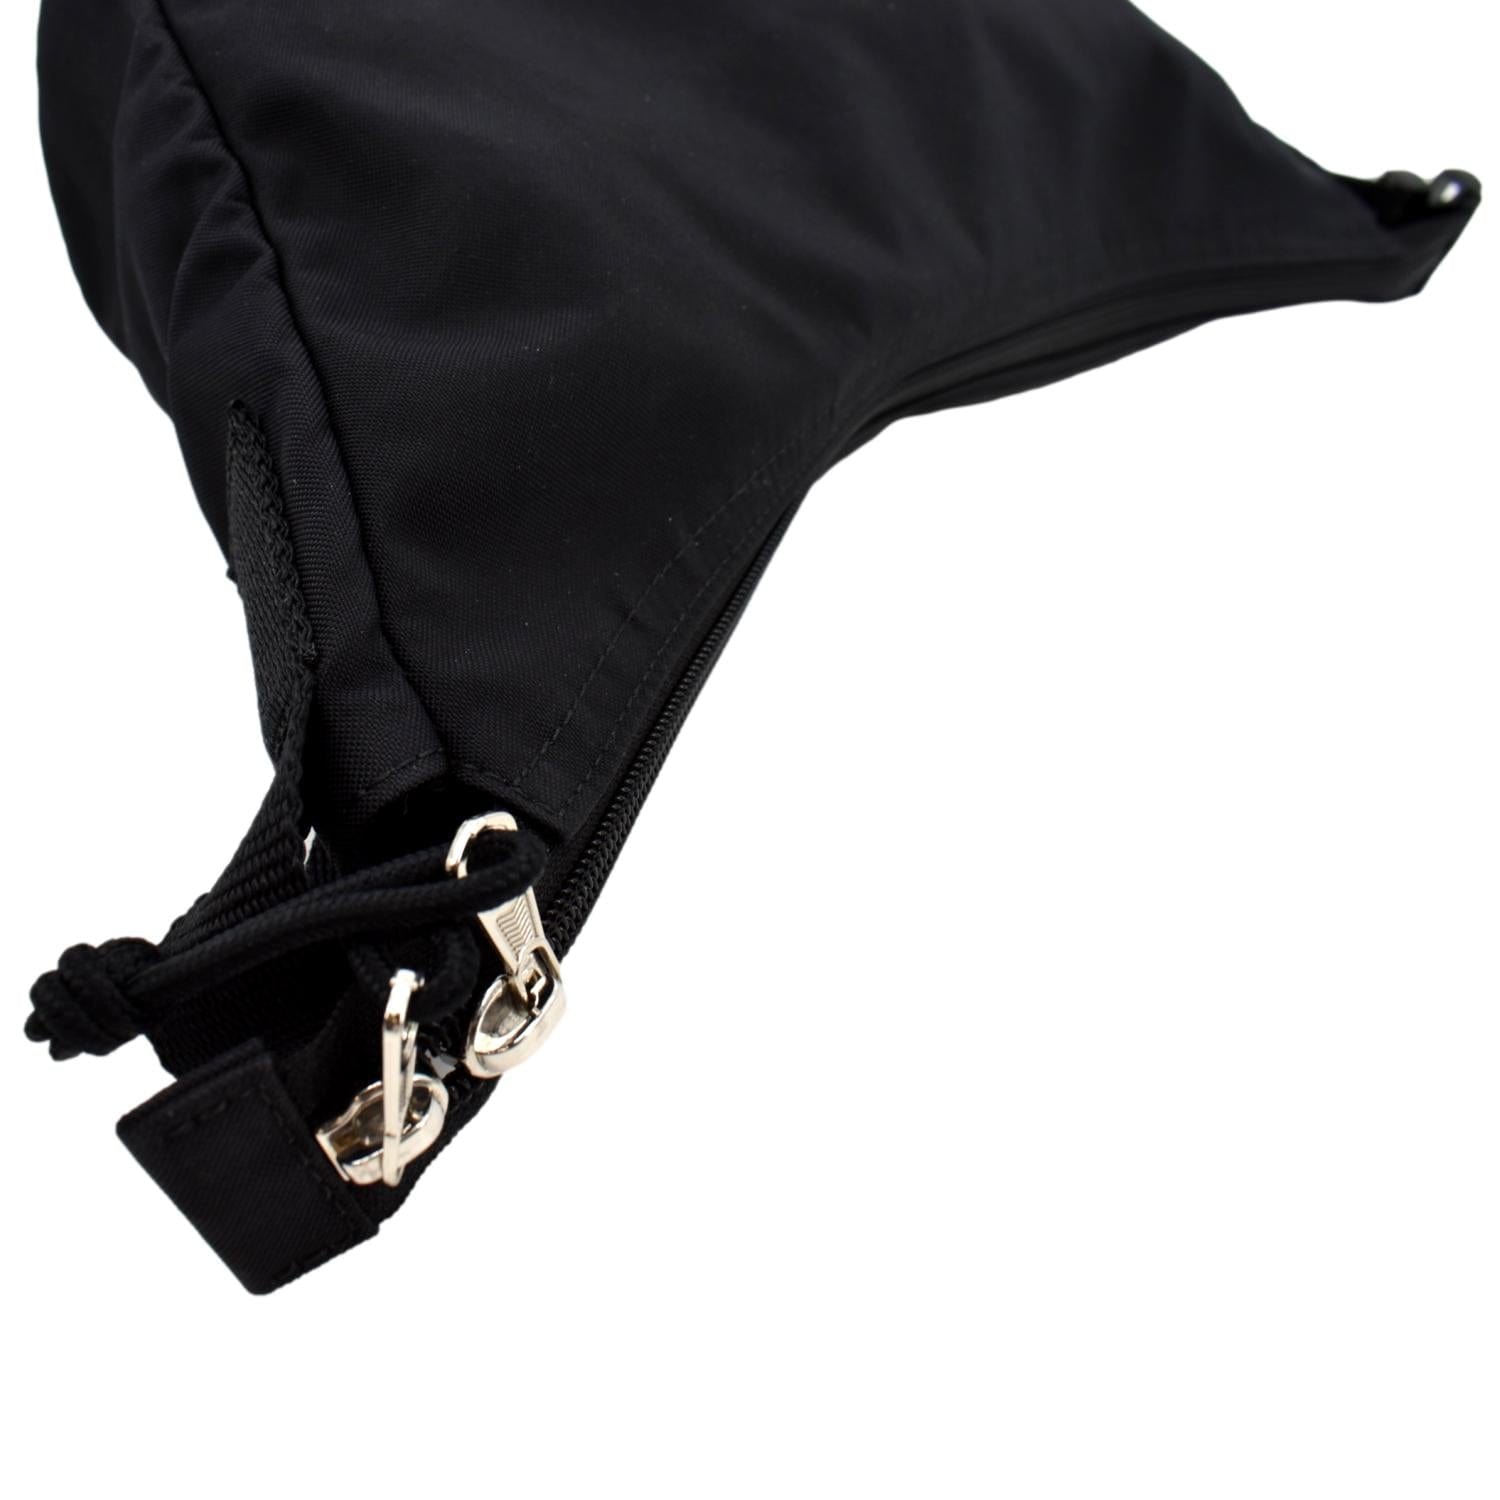 Balenciaga Wheel Logo Nylon Sling Bag In Black/ White